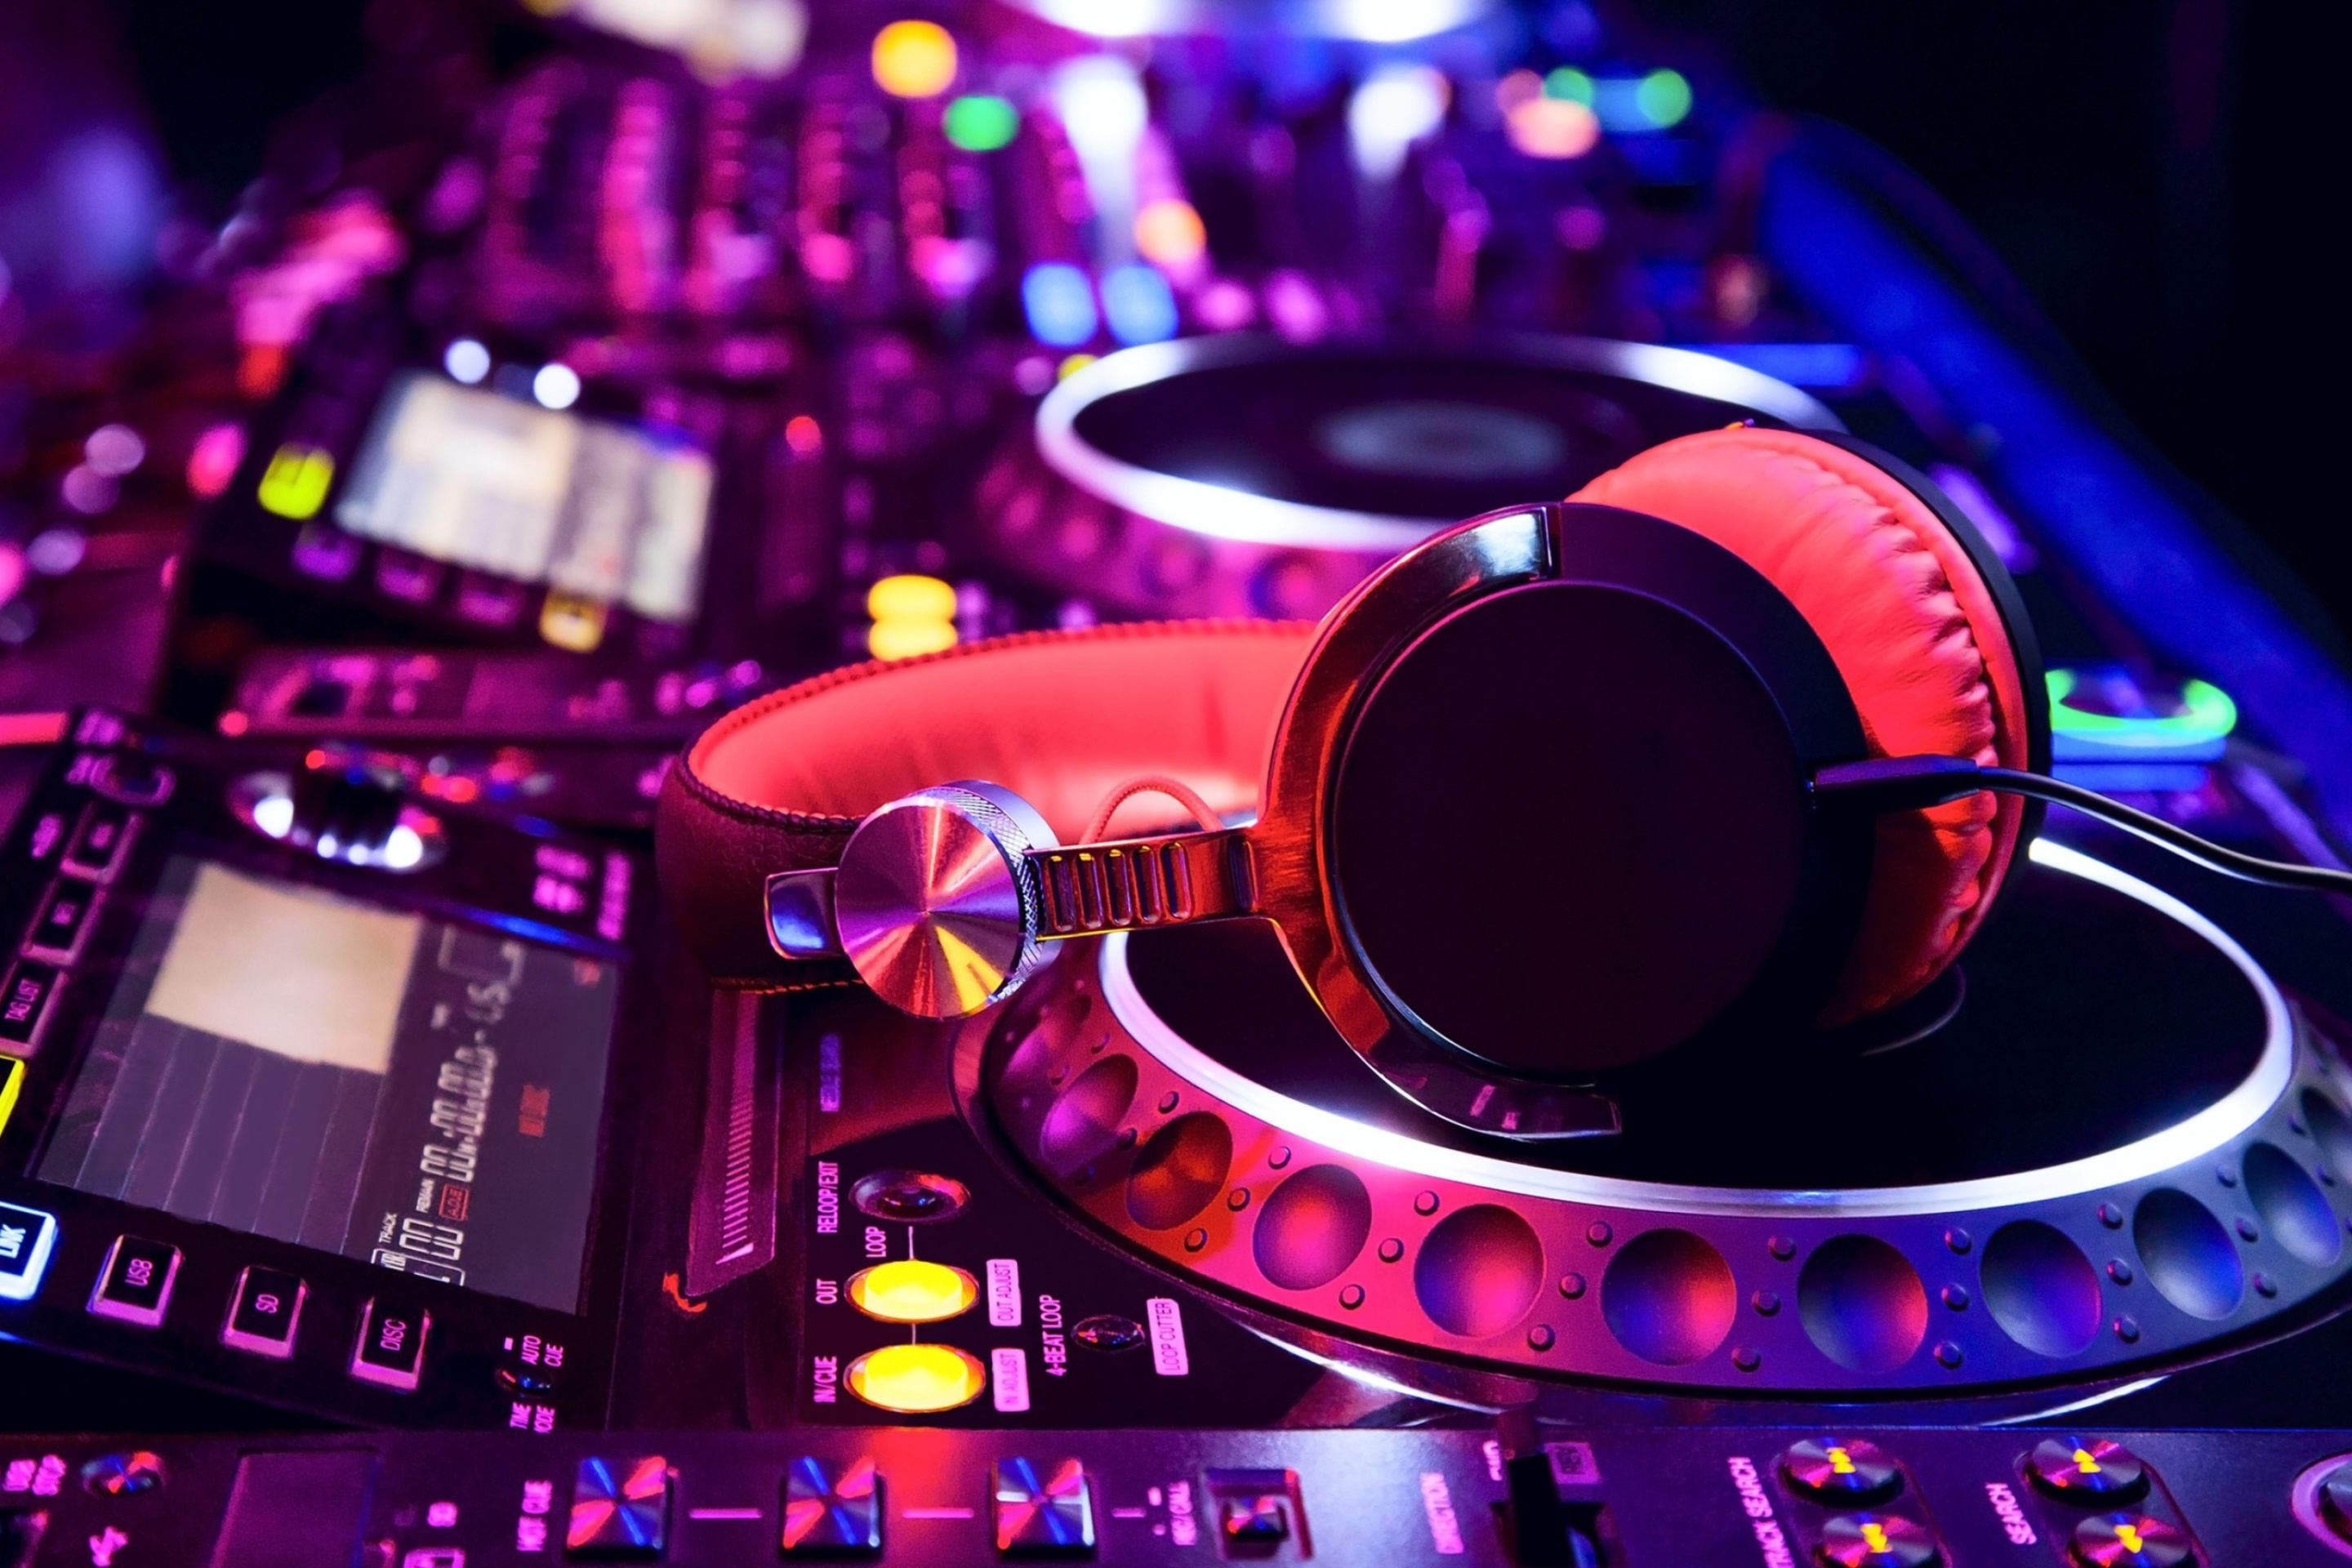 DJ Equipment in nightclub wallpaper 2880x1920